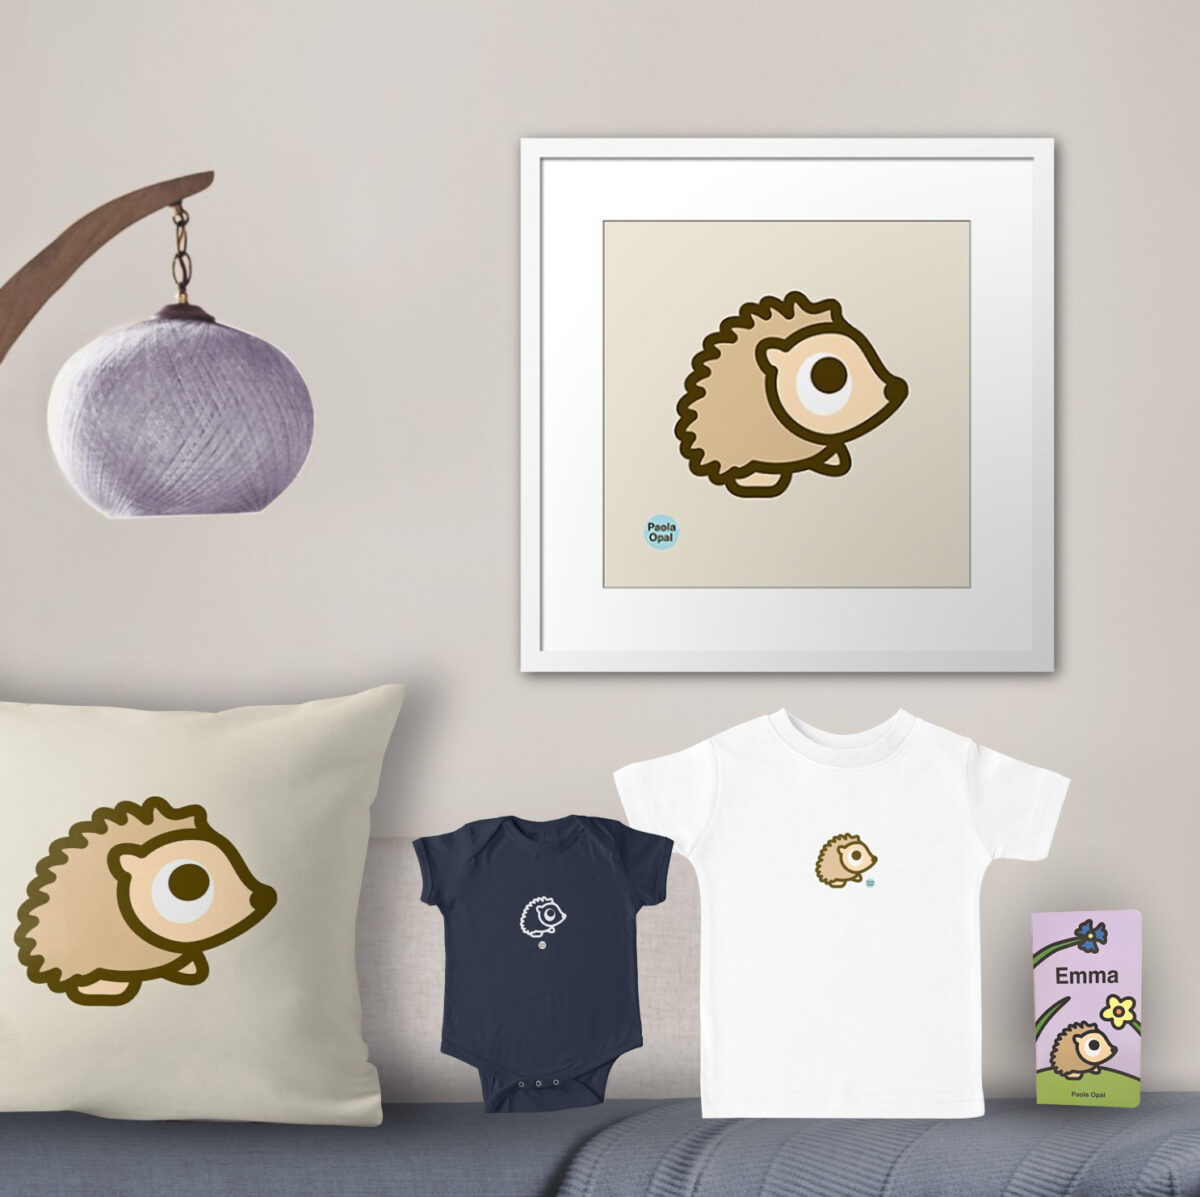 Emma the hedgehog framed art print, throw pillow, baby onesie, t-shirt, and board book